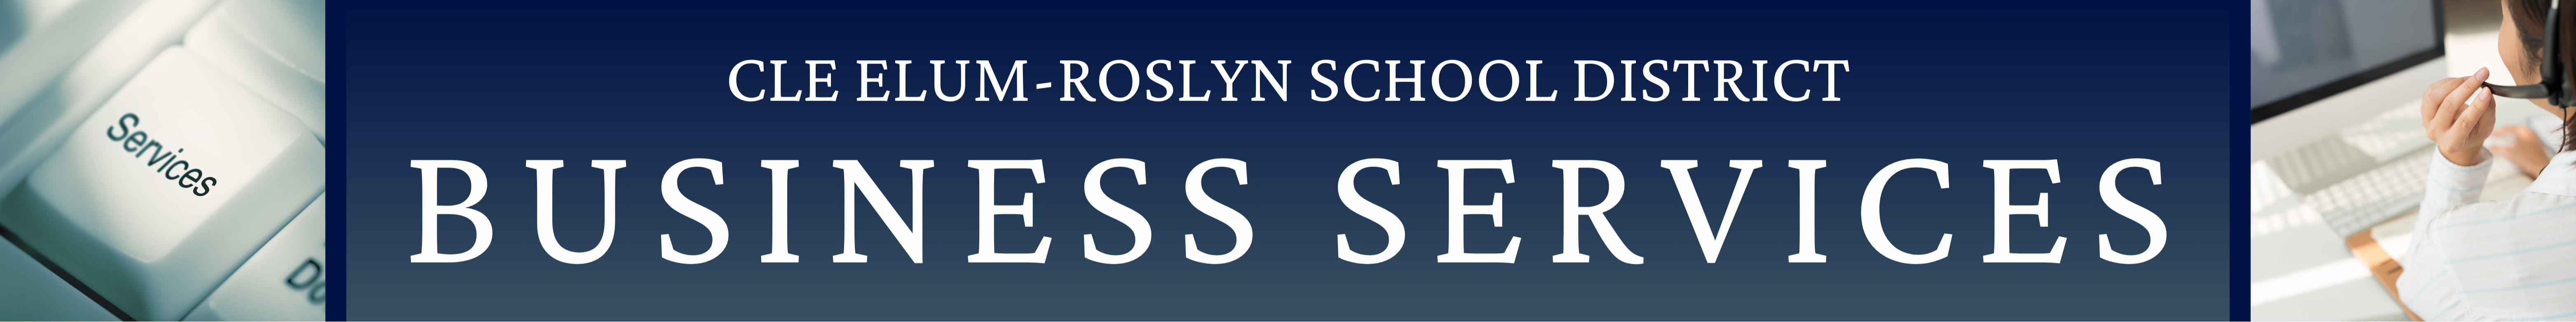 Cle Elum-Roslyn School District Business Services